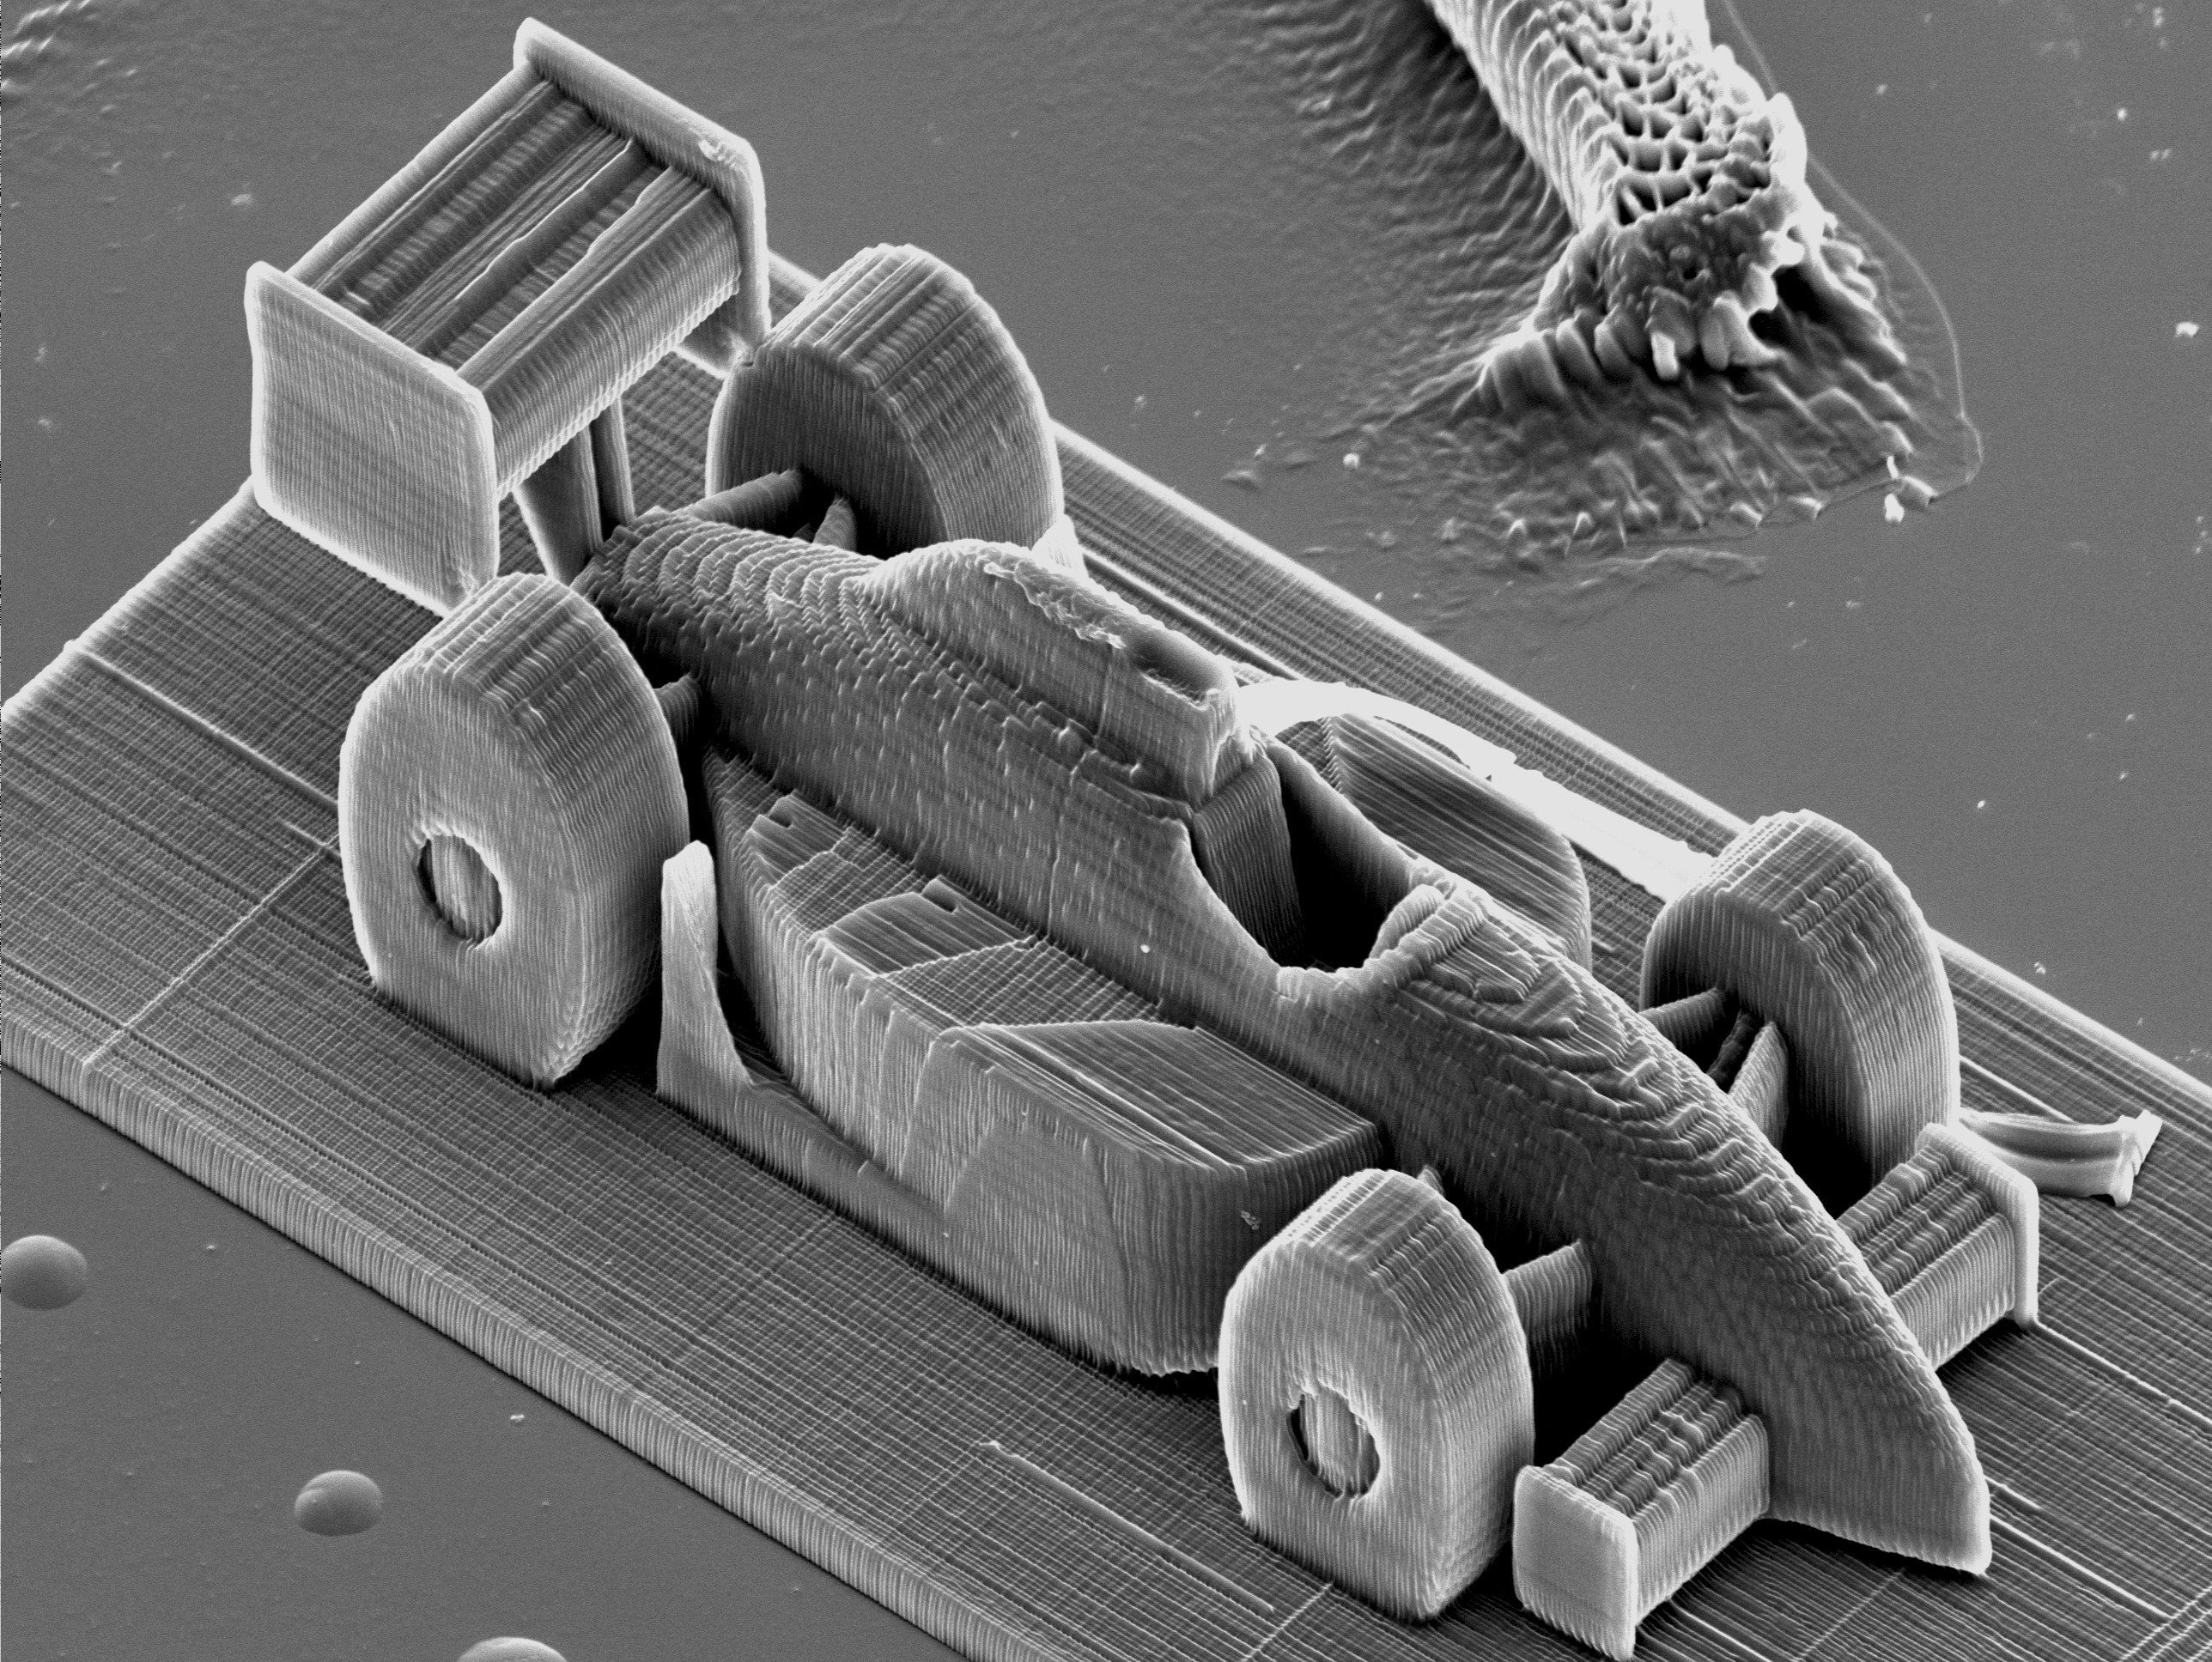 3D printing of a microscopic race car. Image credit: TU Vienna